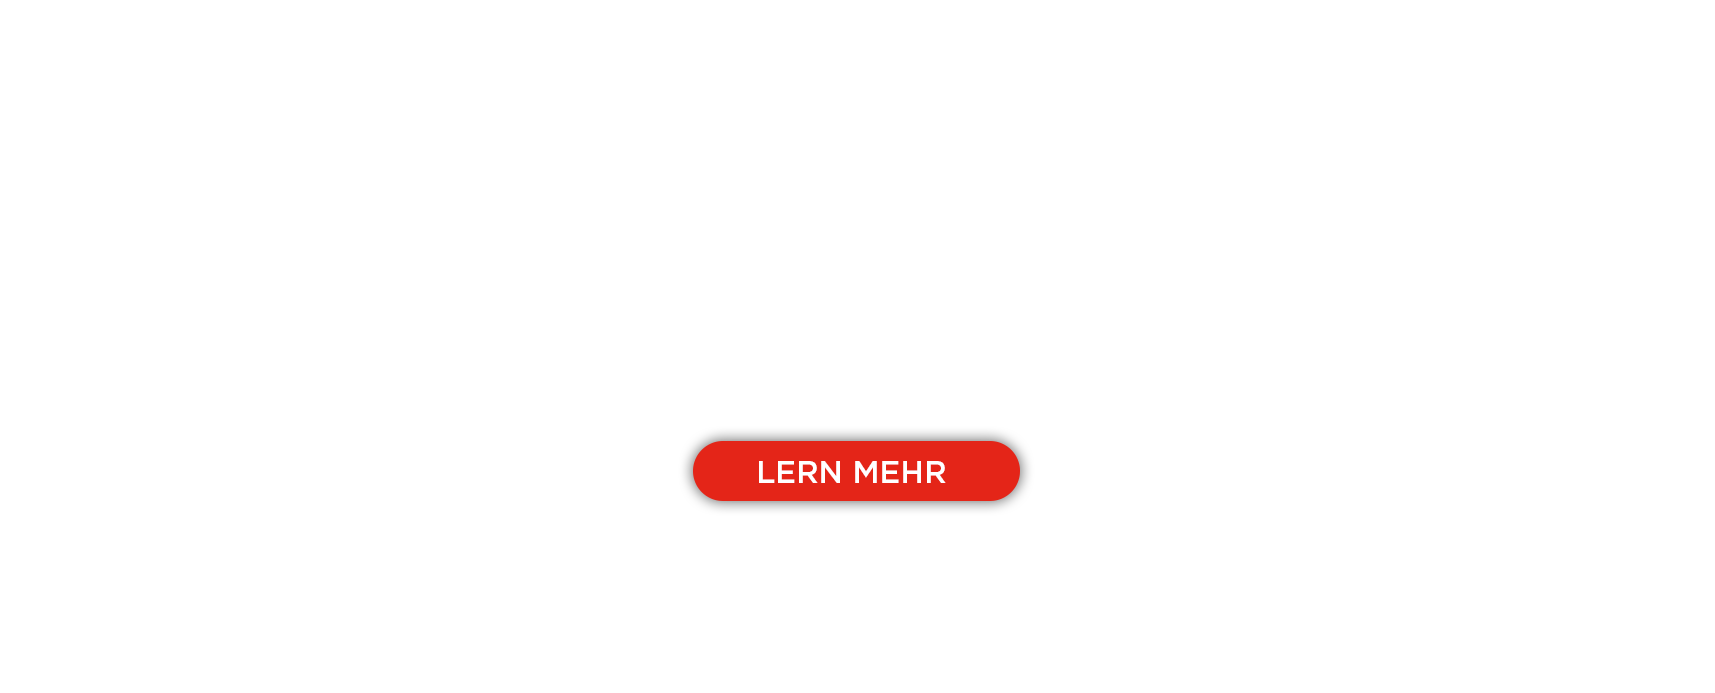 Die CompTIA Tech Career Academy bietet ab März 2022 Online-Kurse an.